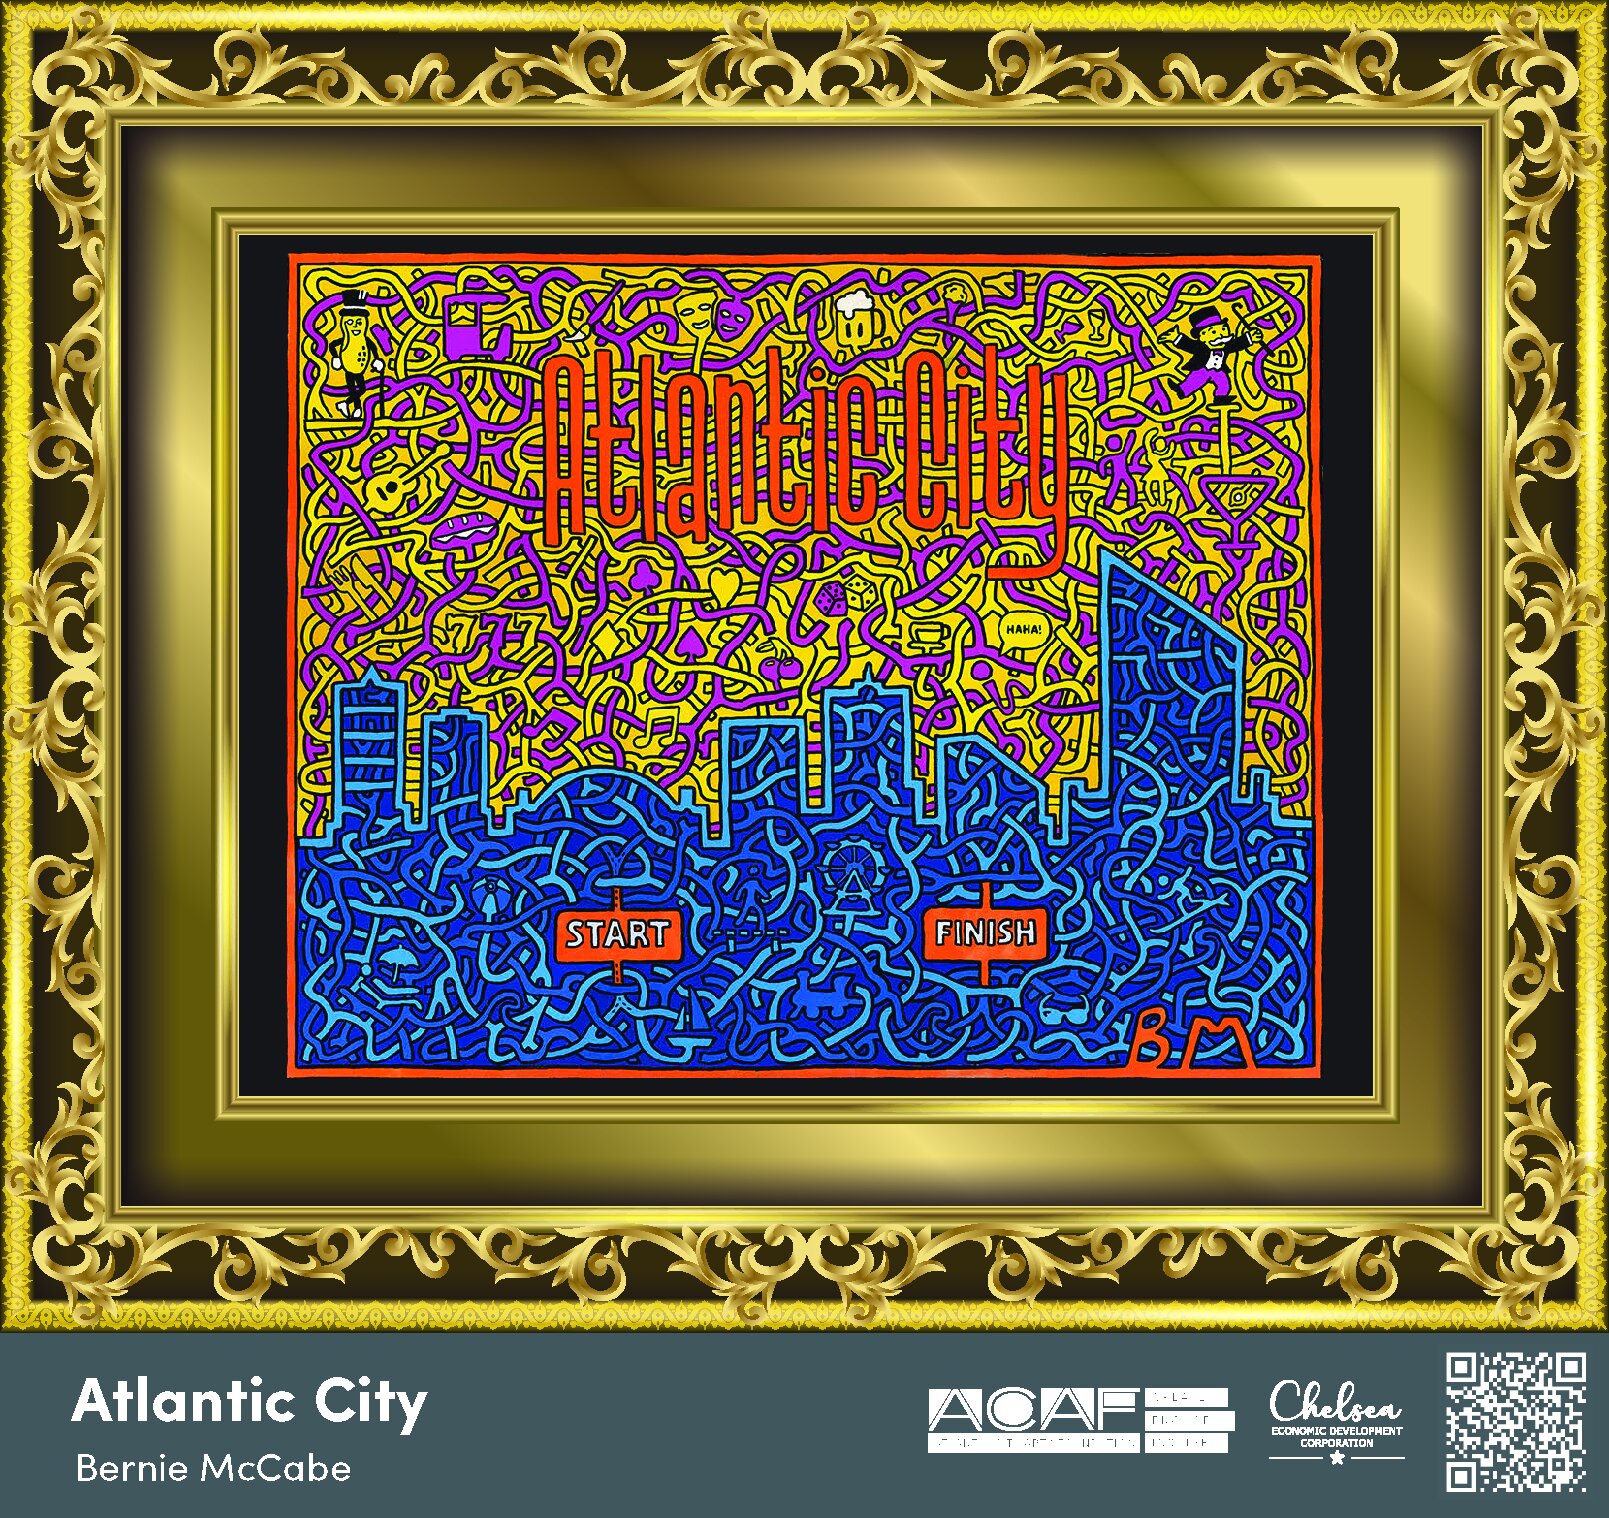 SG-Web-_35x33 Print - Atlantic City - BERNIE.jpg